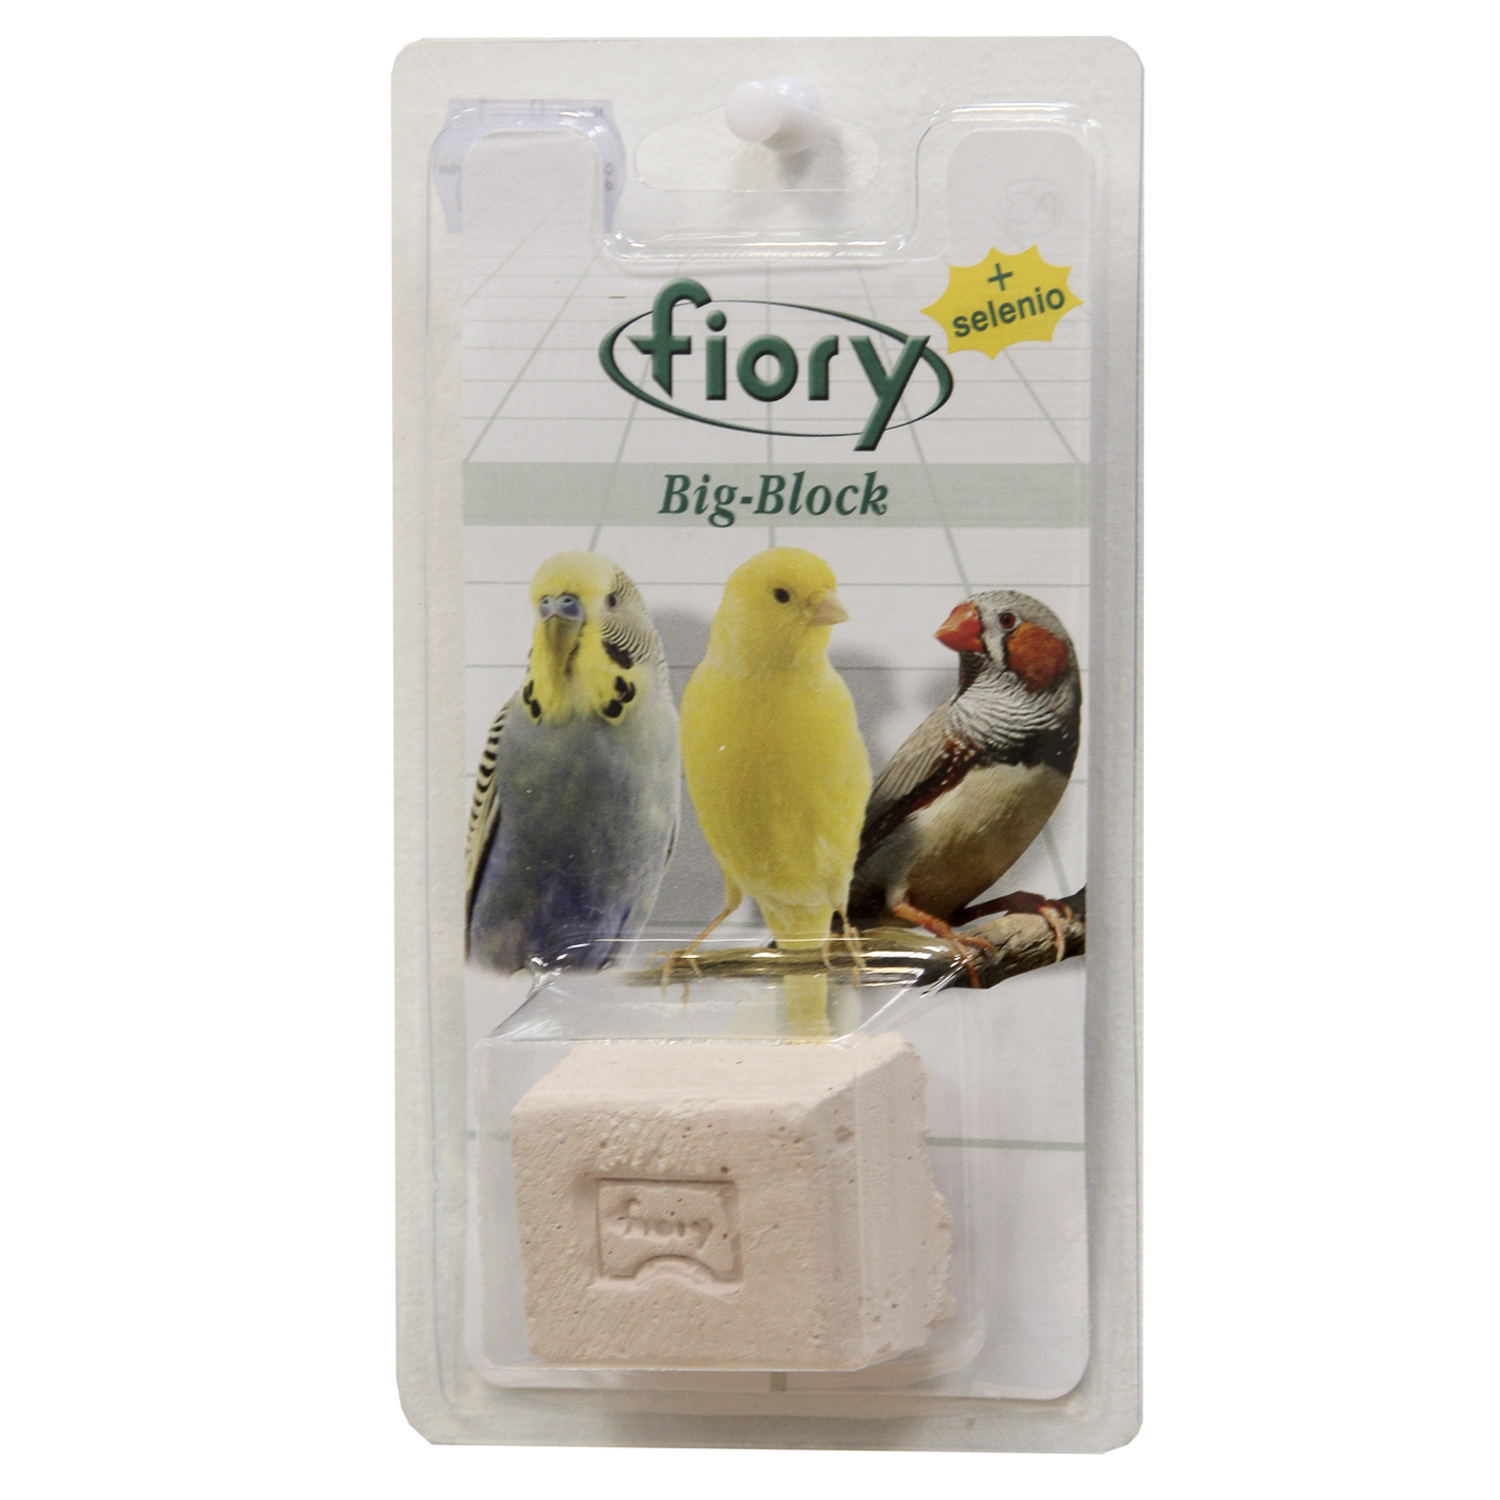 Fiory Fiory био-камень для птиц, с селеном (55 г) fiory био камень для птиц big block с селеном